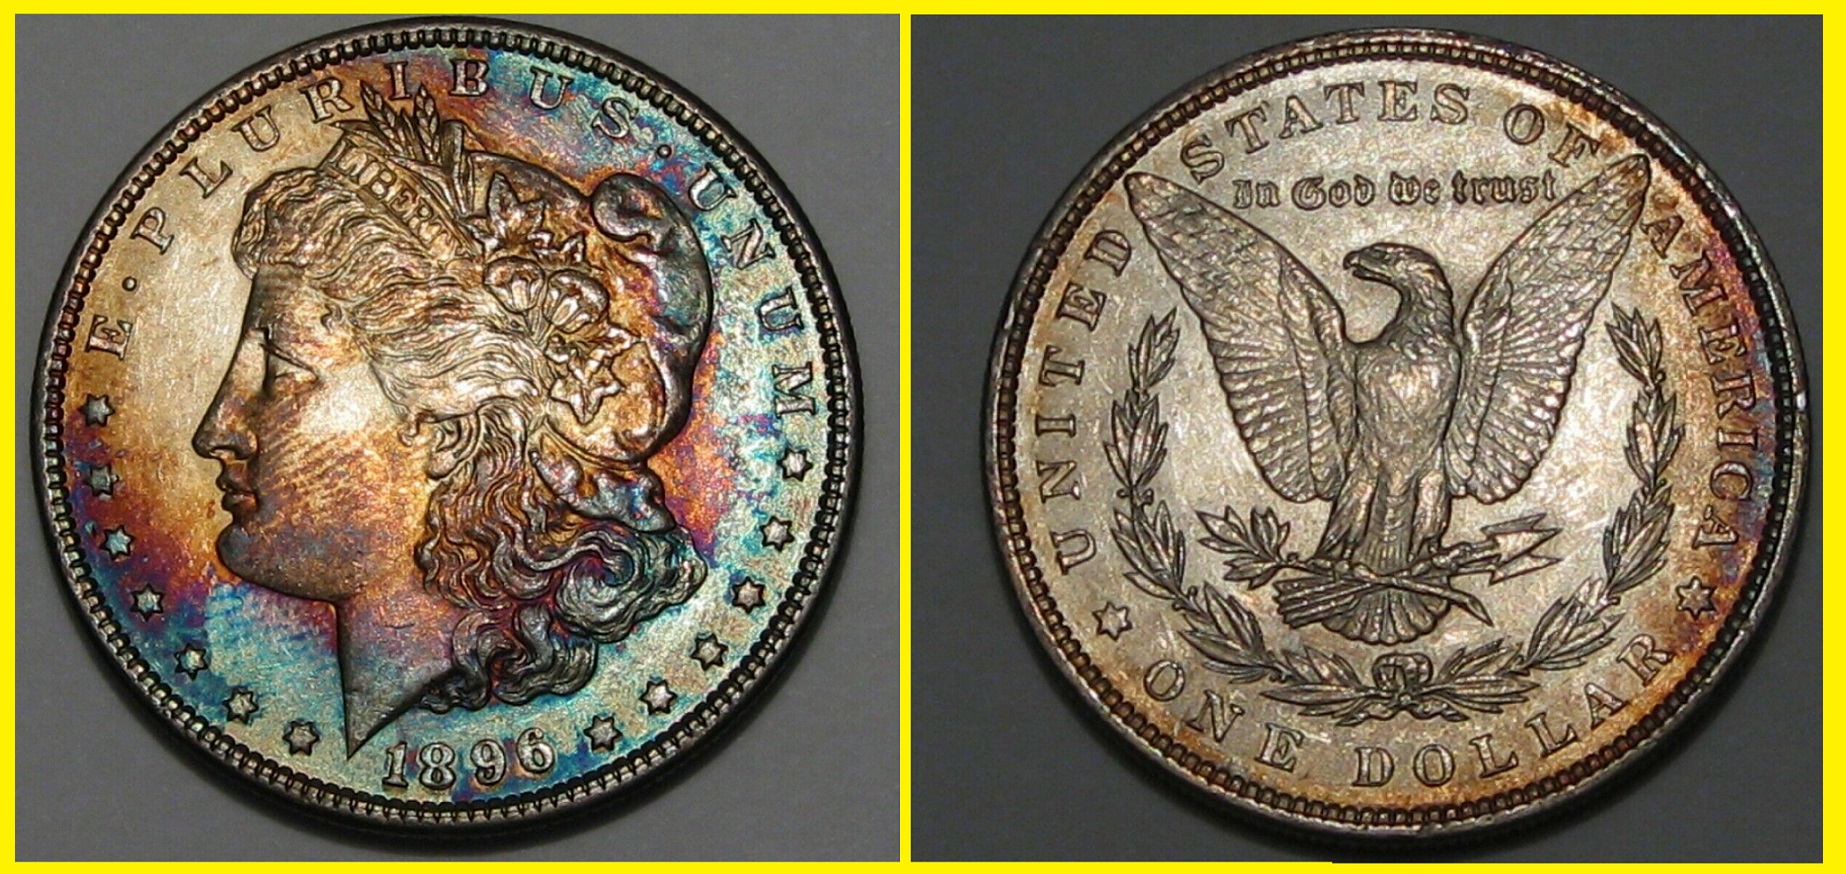 1896 Unc Morgan Dollar. Half-Moon Rainbow Tone.jpg